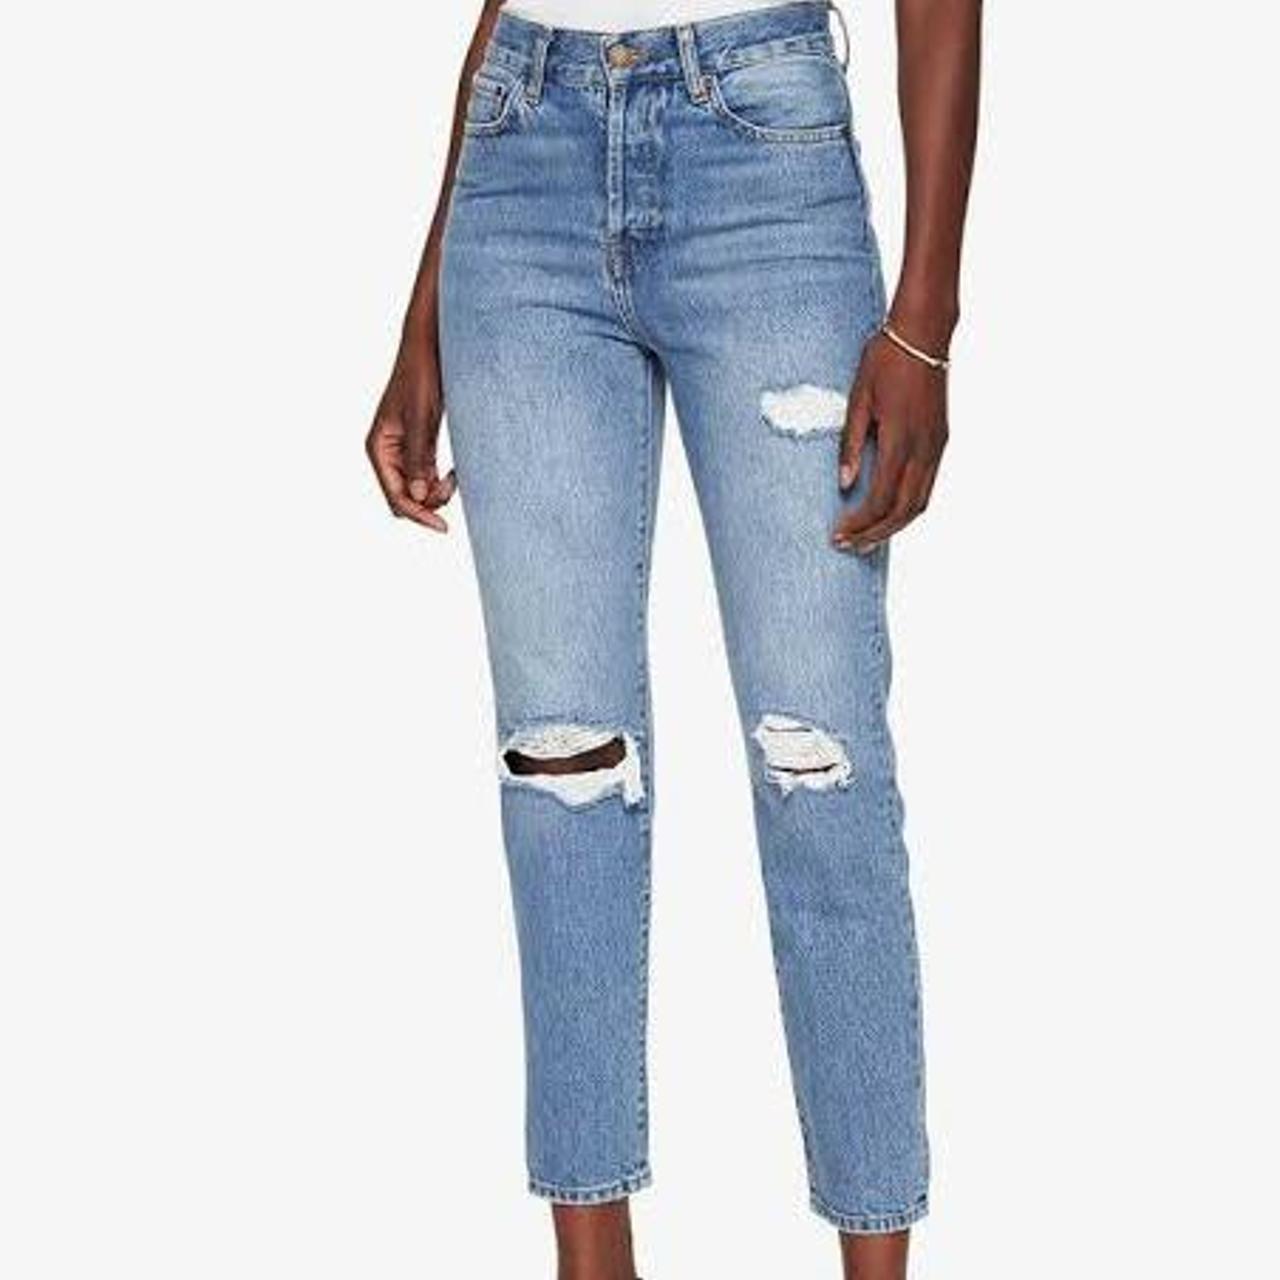 Anine Bing Distressed jeans Style is Brenda... - Depop